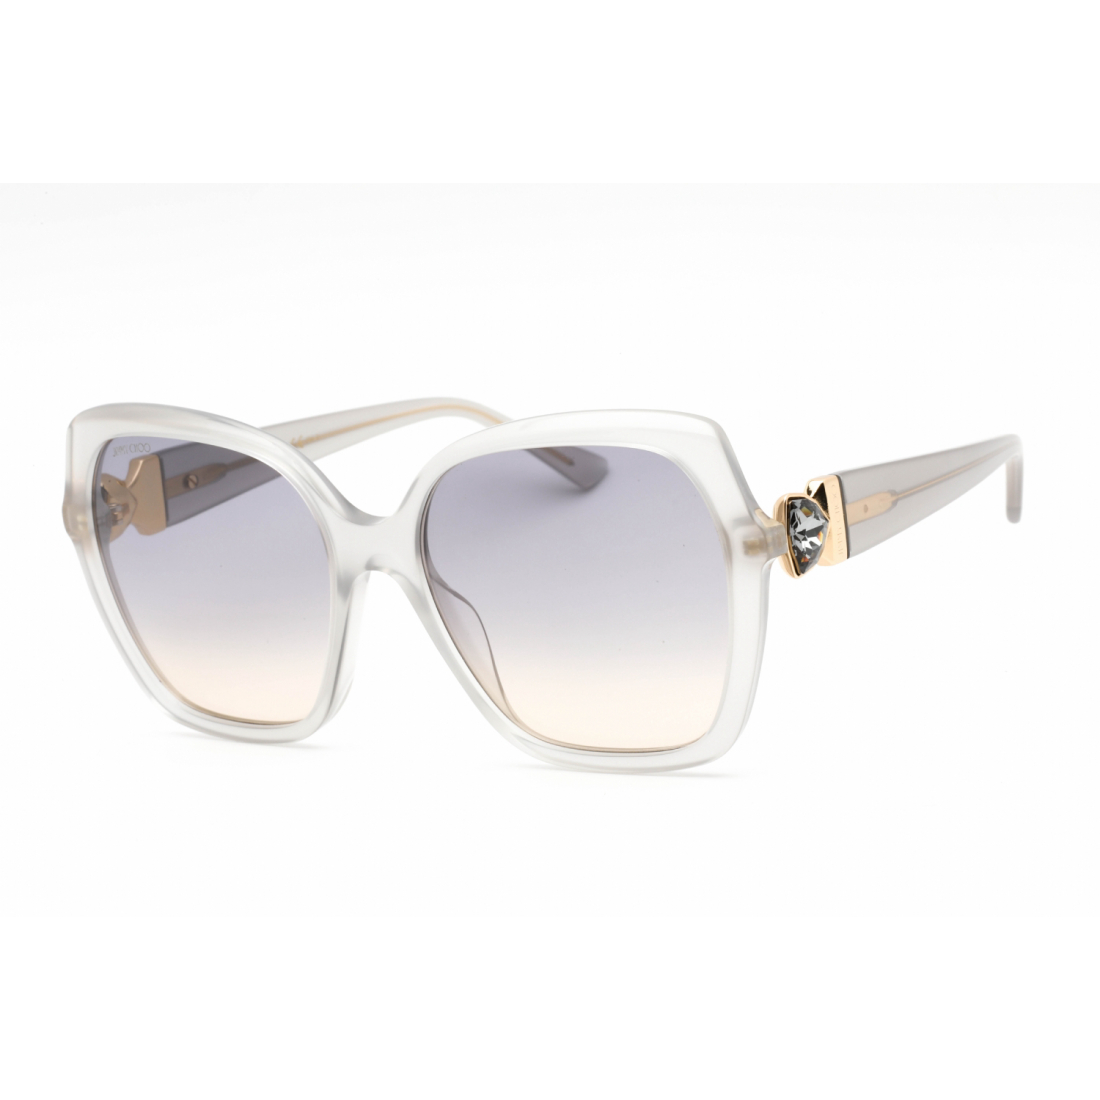 Women's 'MANON/G/S KB7 GREY' Sunglasses